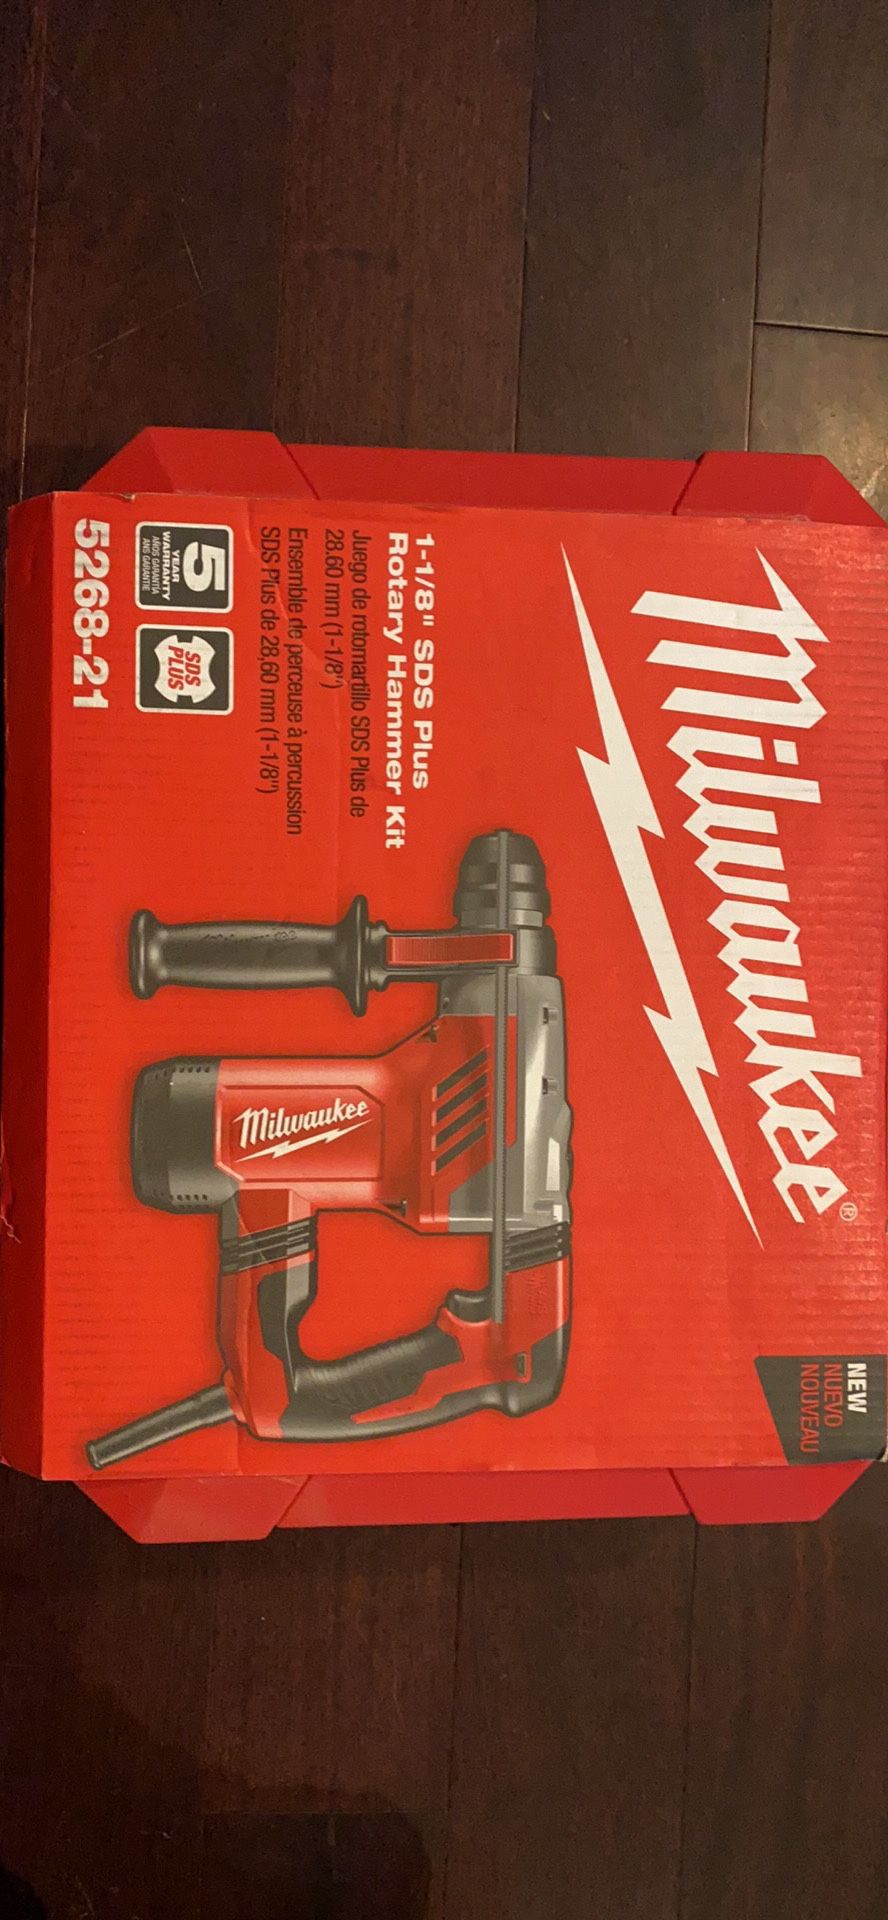 Milwaukee Hammer drill